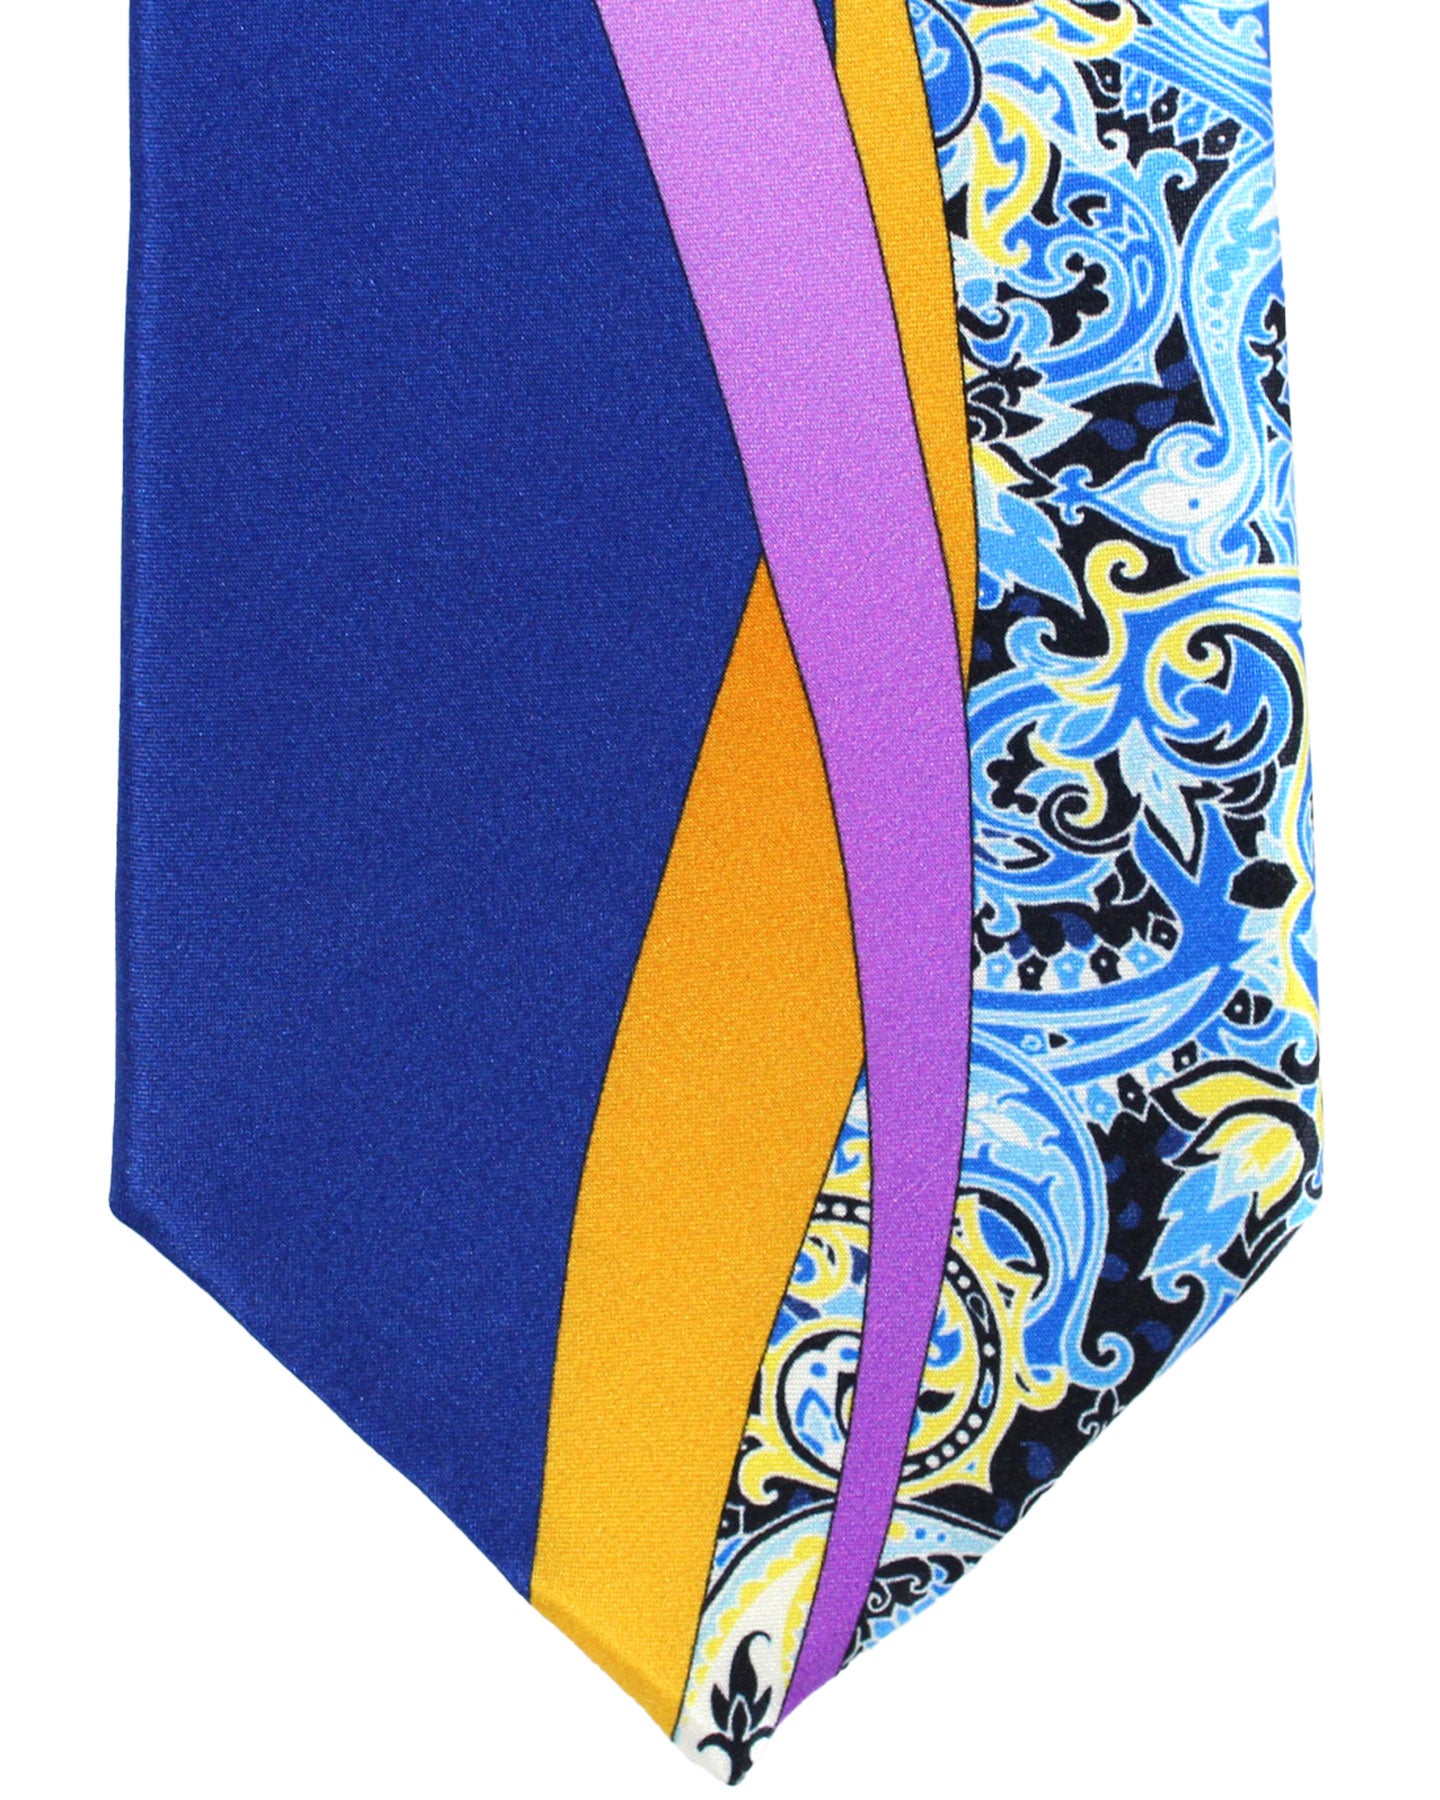 Vitaliano Pancaldi Silk Tie Royal Blue Yellow Paisley Swirl Design